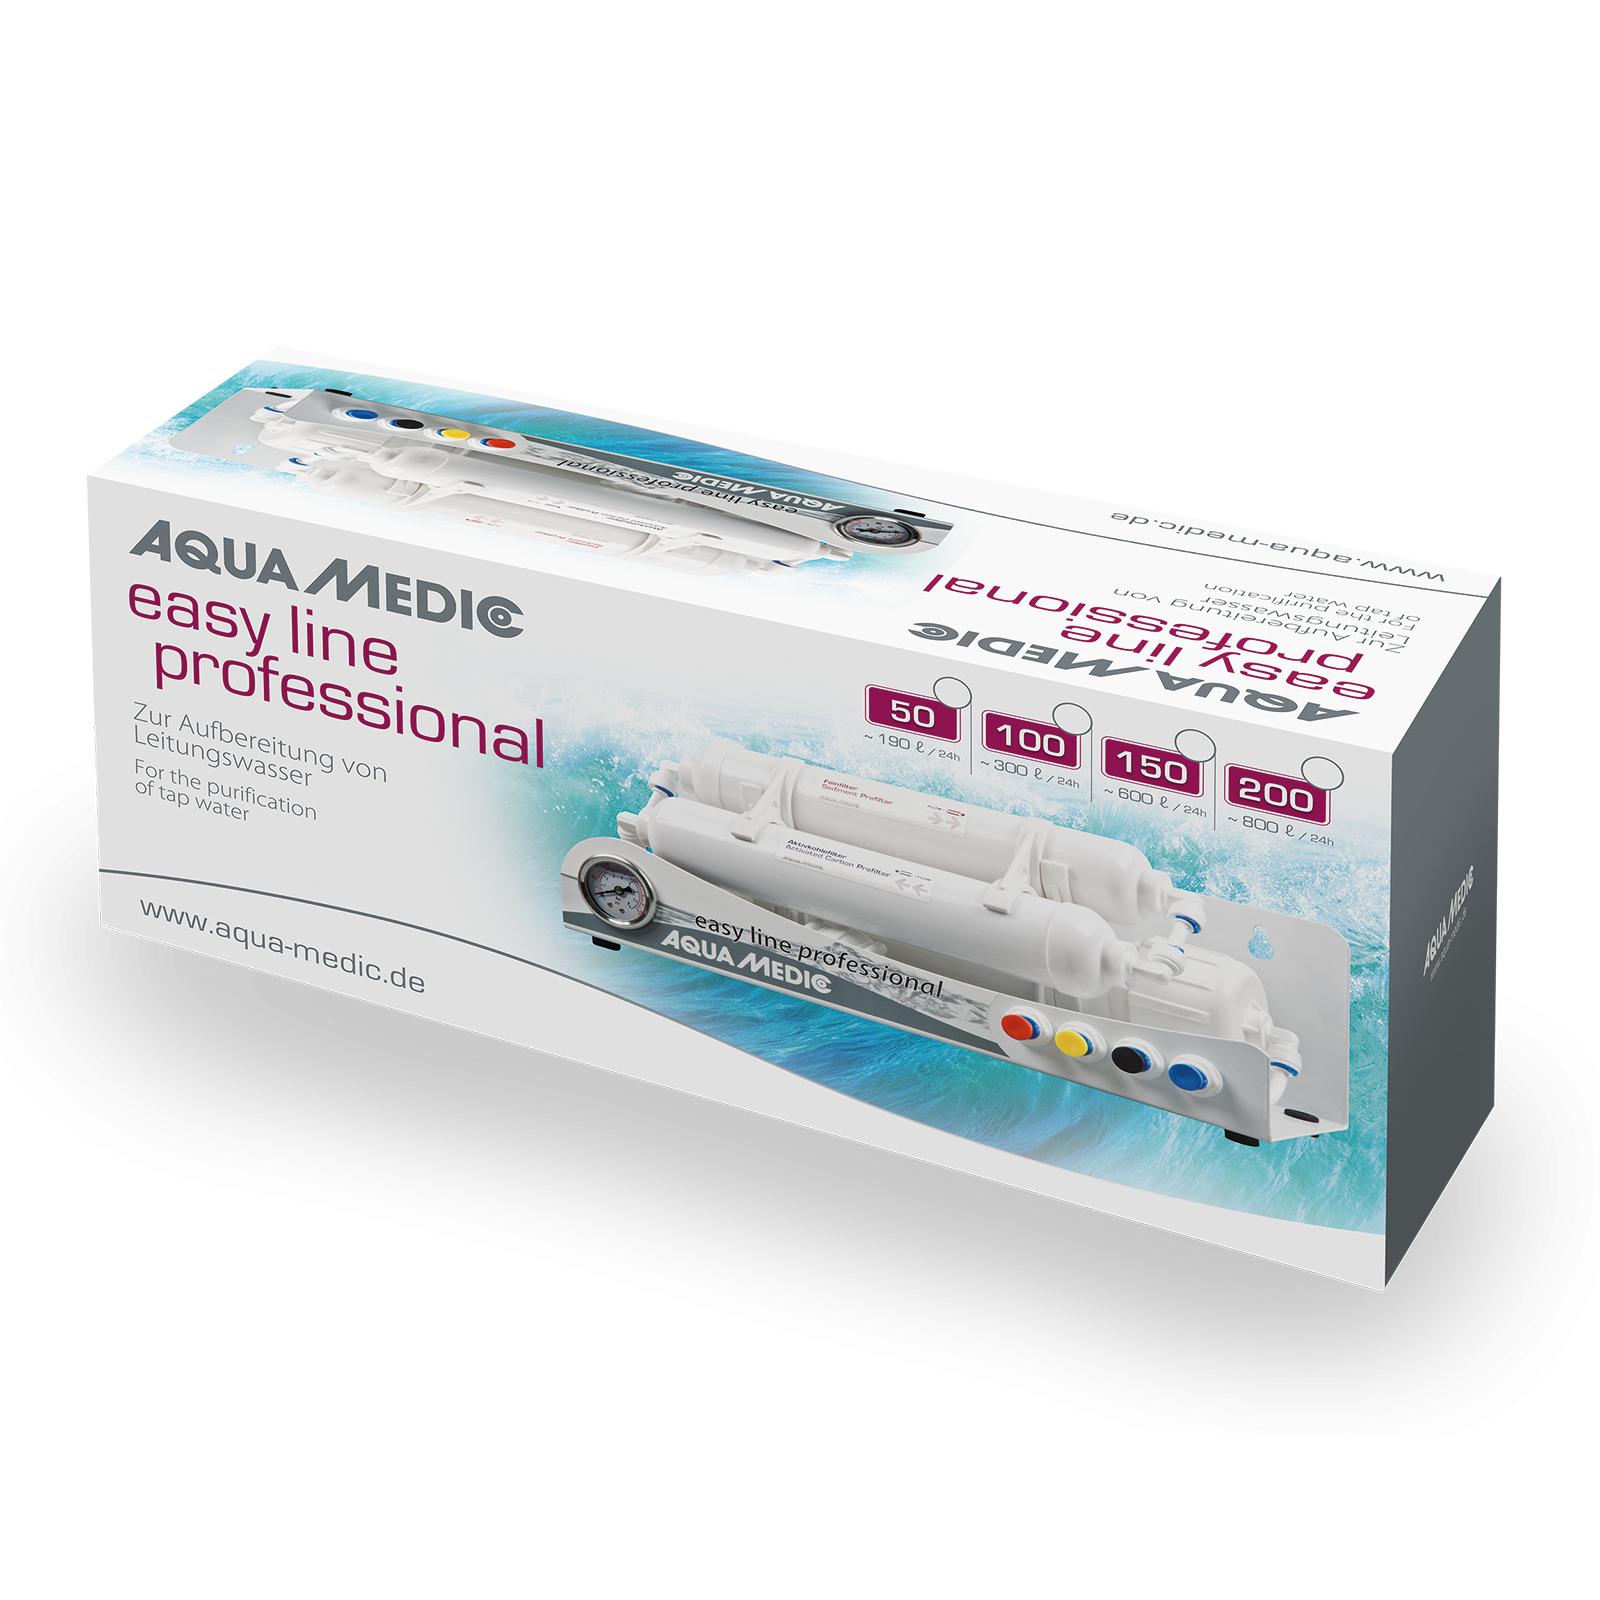 Aqua Medic easy line professional 100 GPD